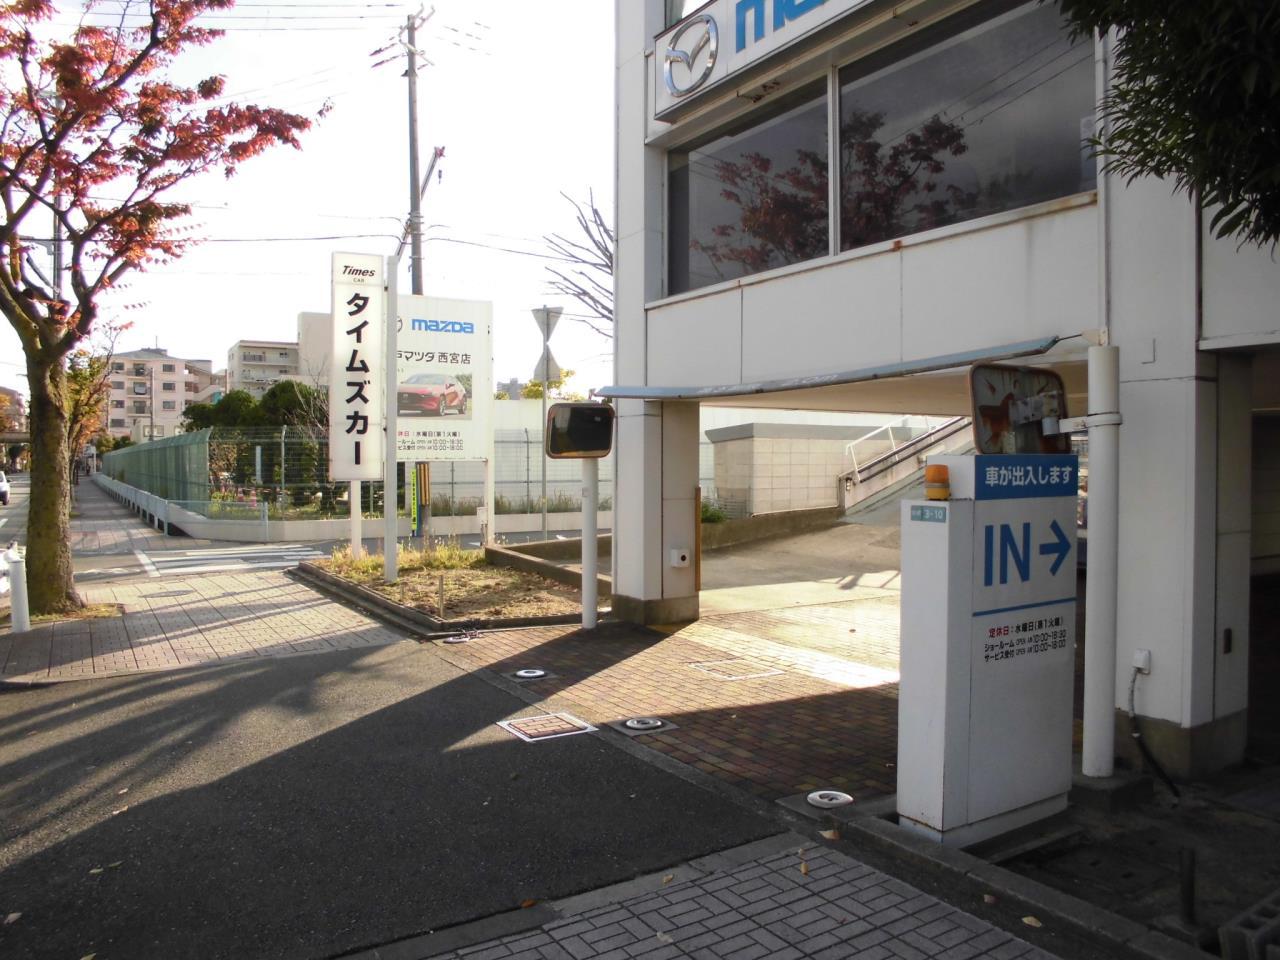 Times CAR RENTAL Nishinomiya 171